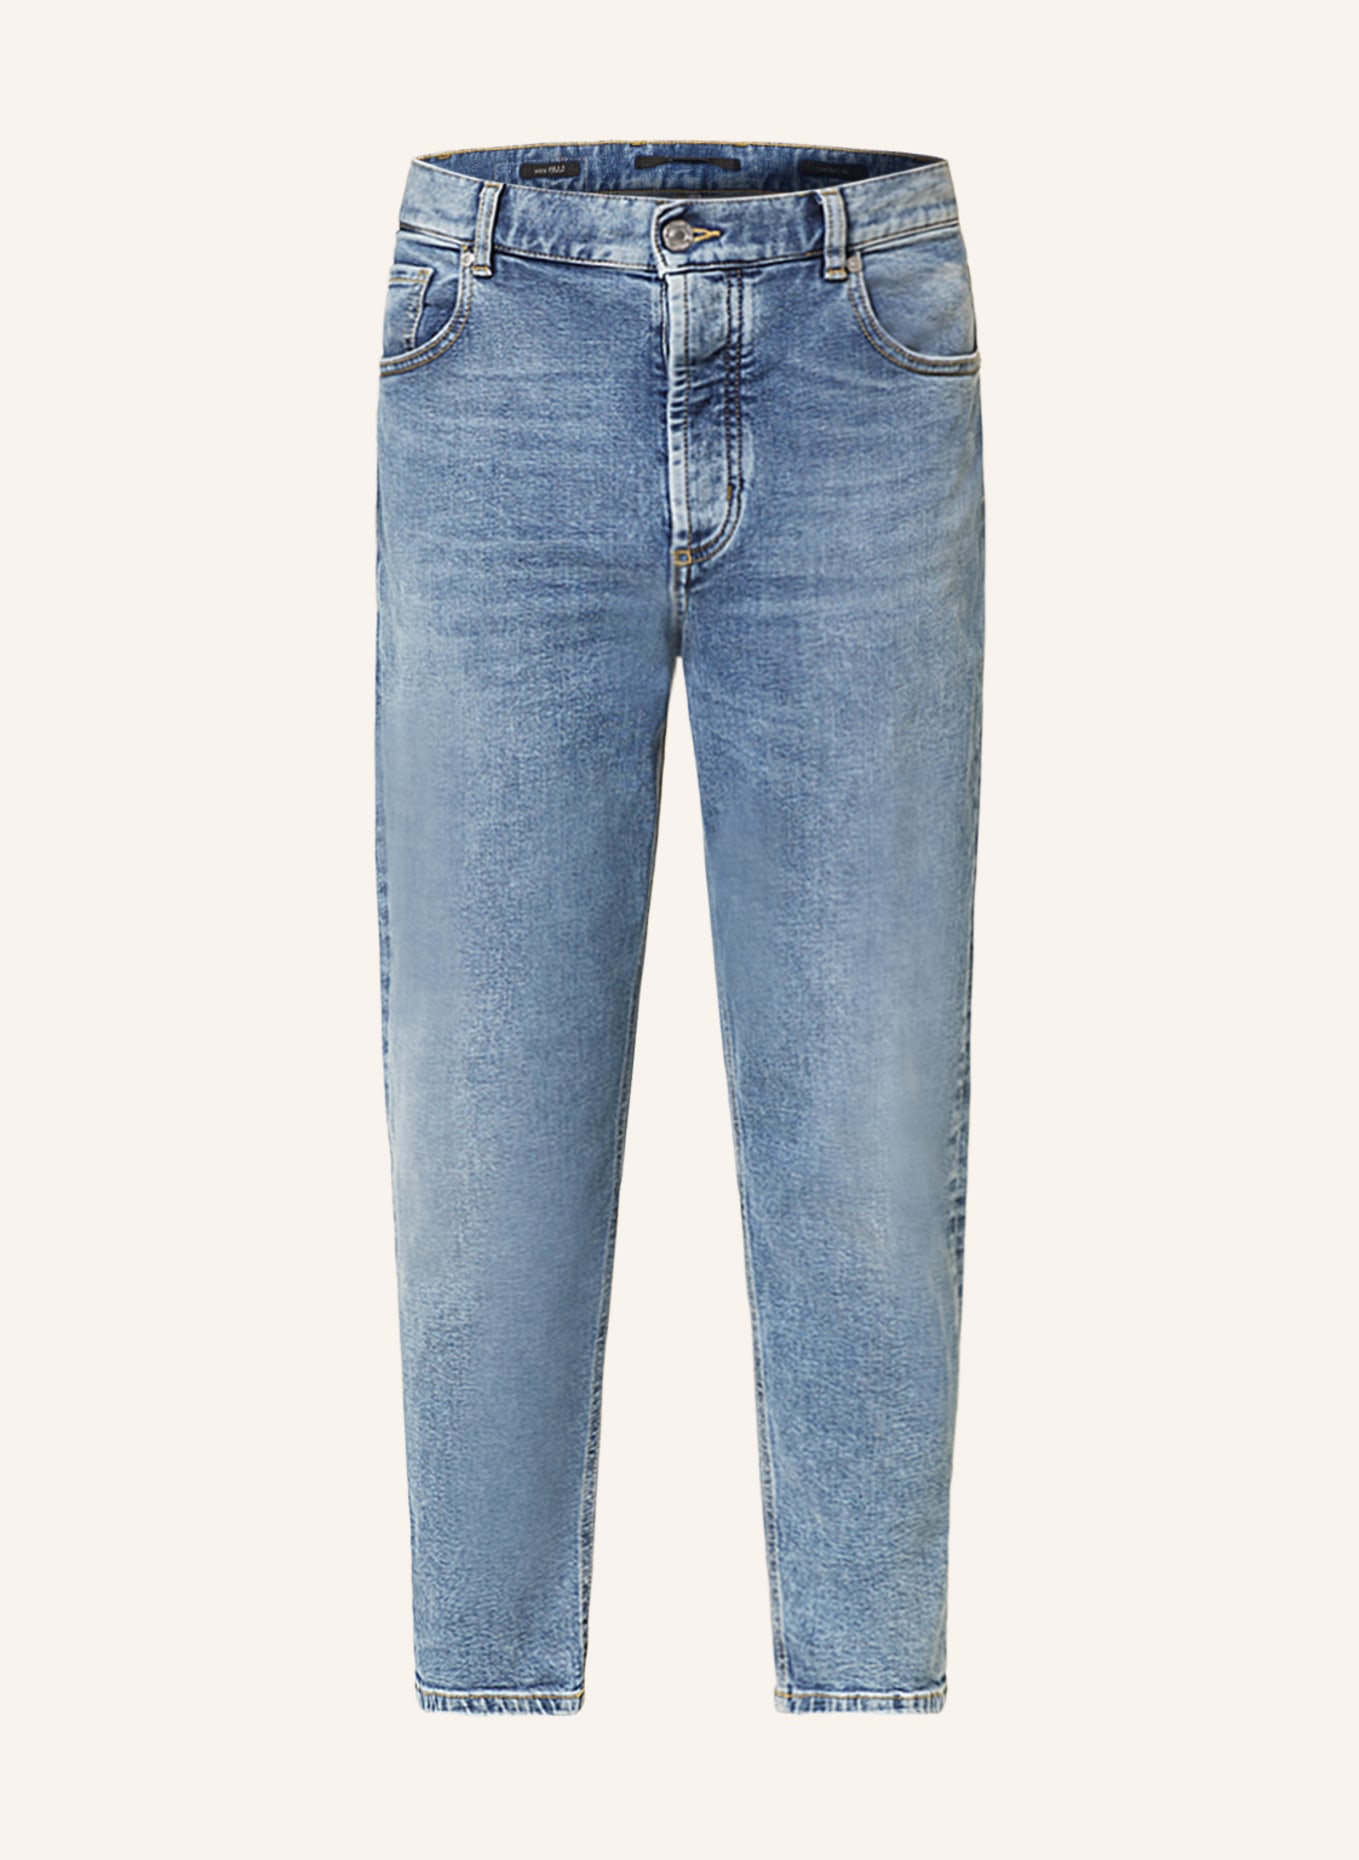 ALBERTO Jeans JIVE Comfort Fit, Farbe: 840 (Bild 1)